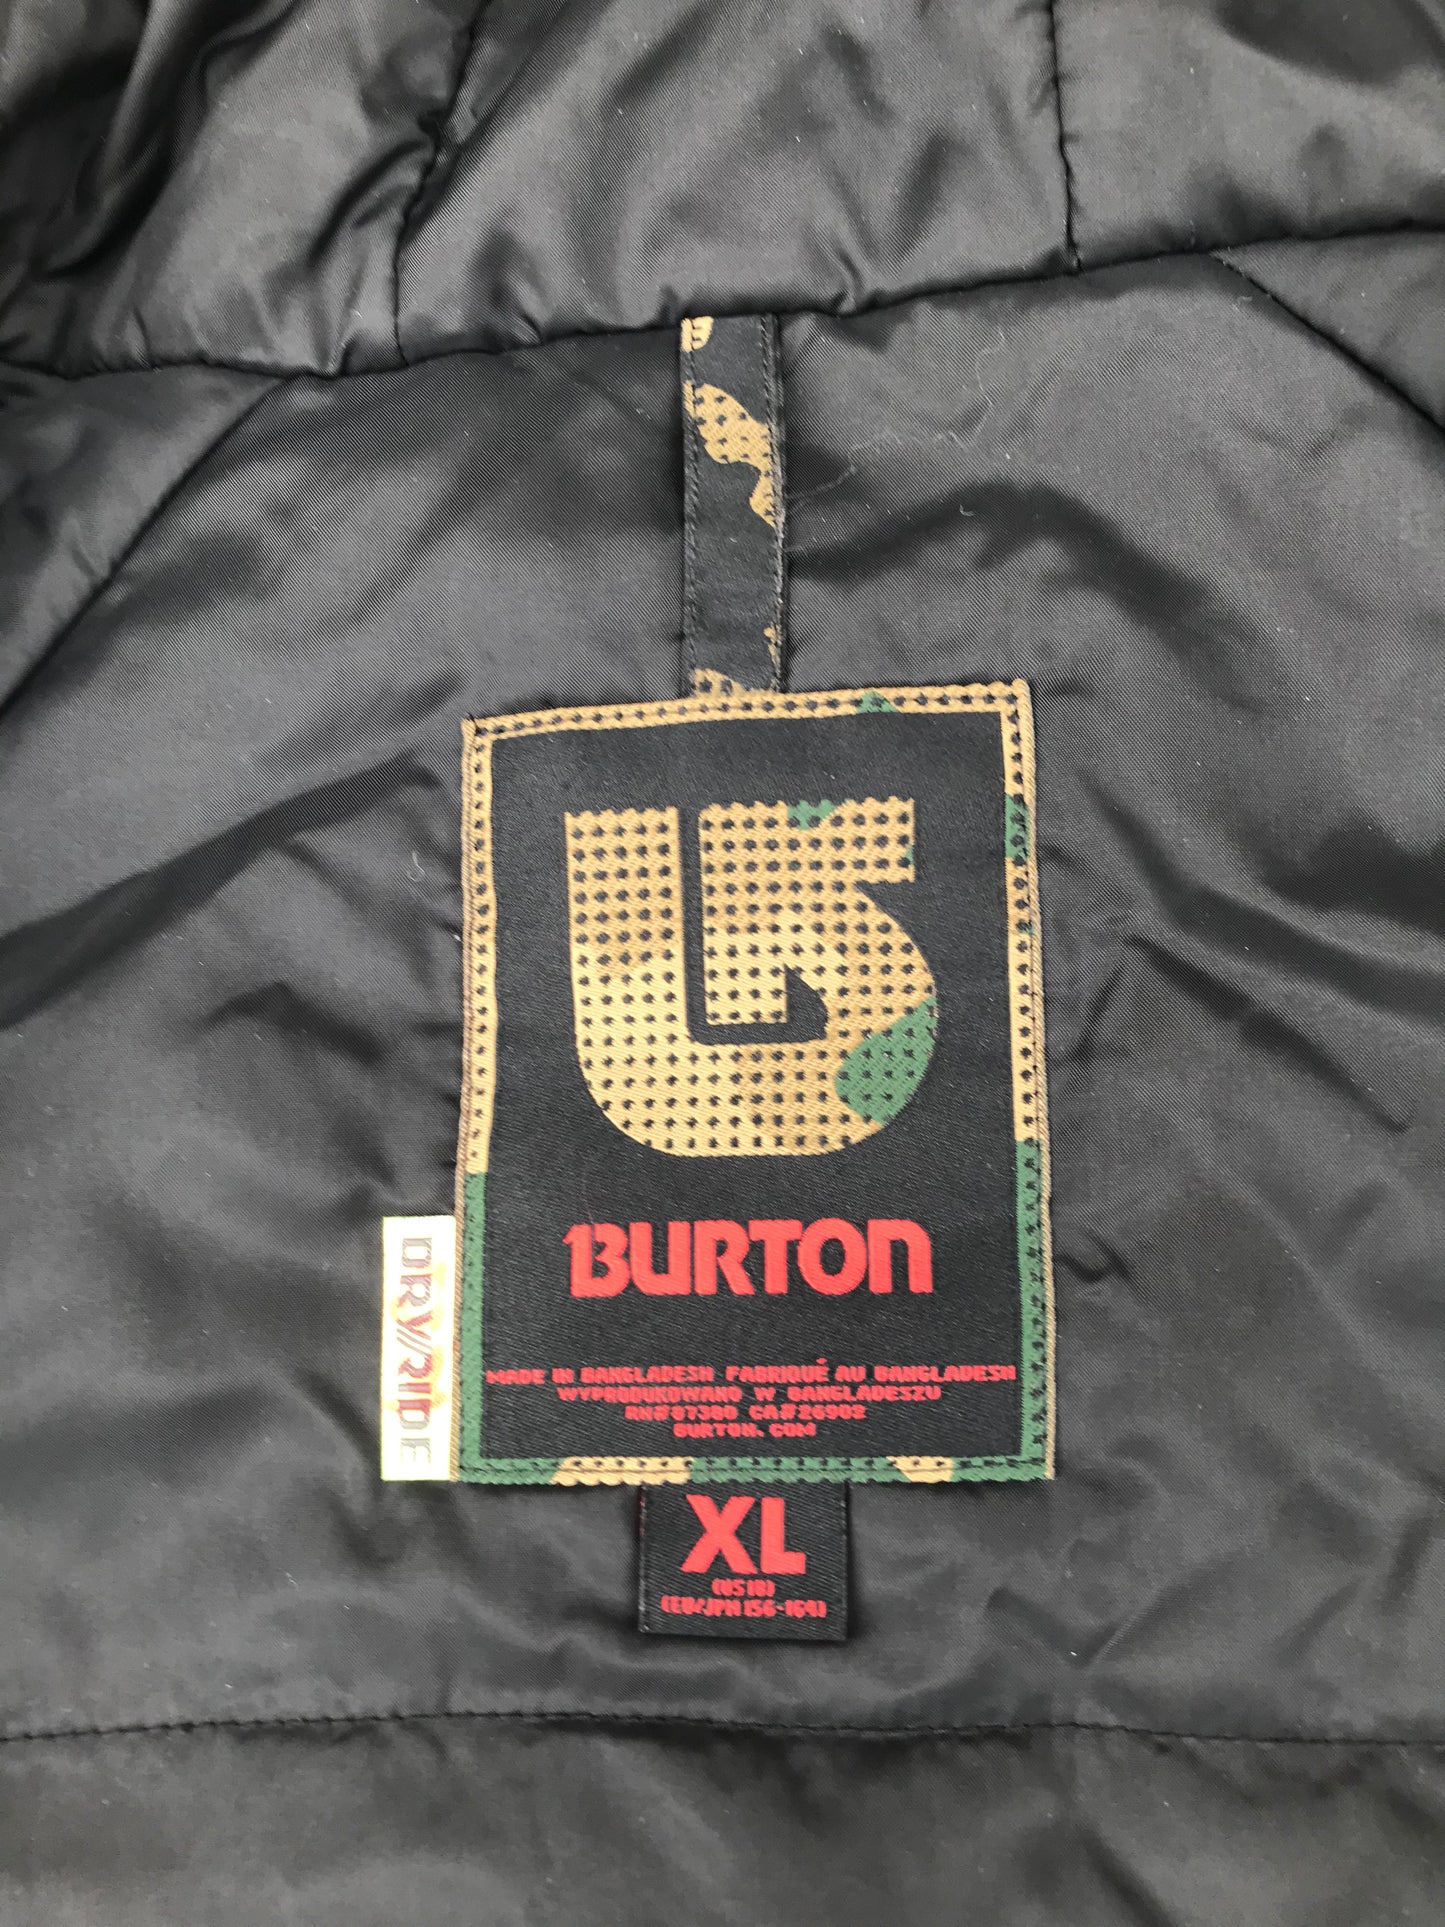 Winter Coat Child Size X Large 18 Youth Burton Black Multi With Snow Belt New Demo